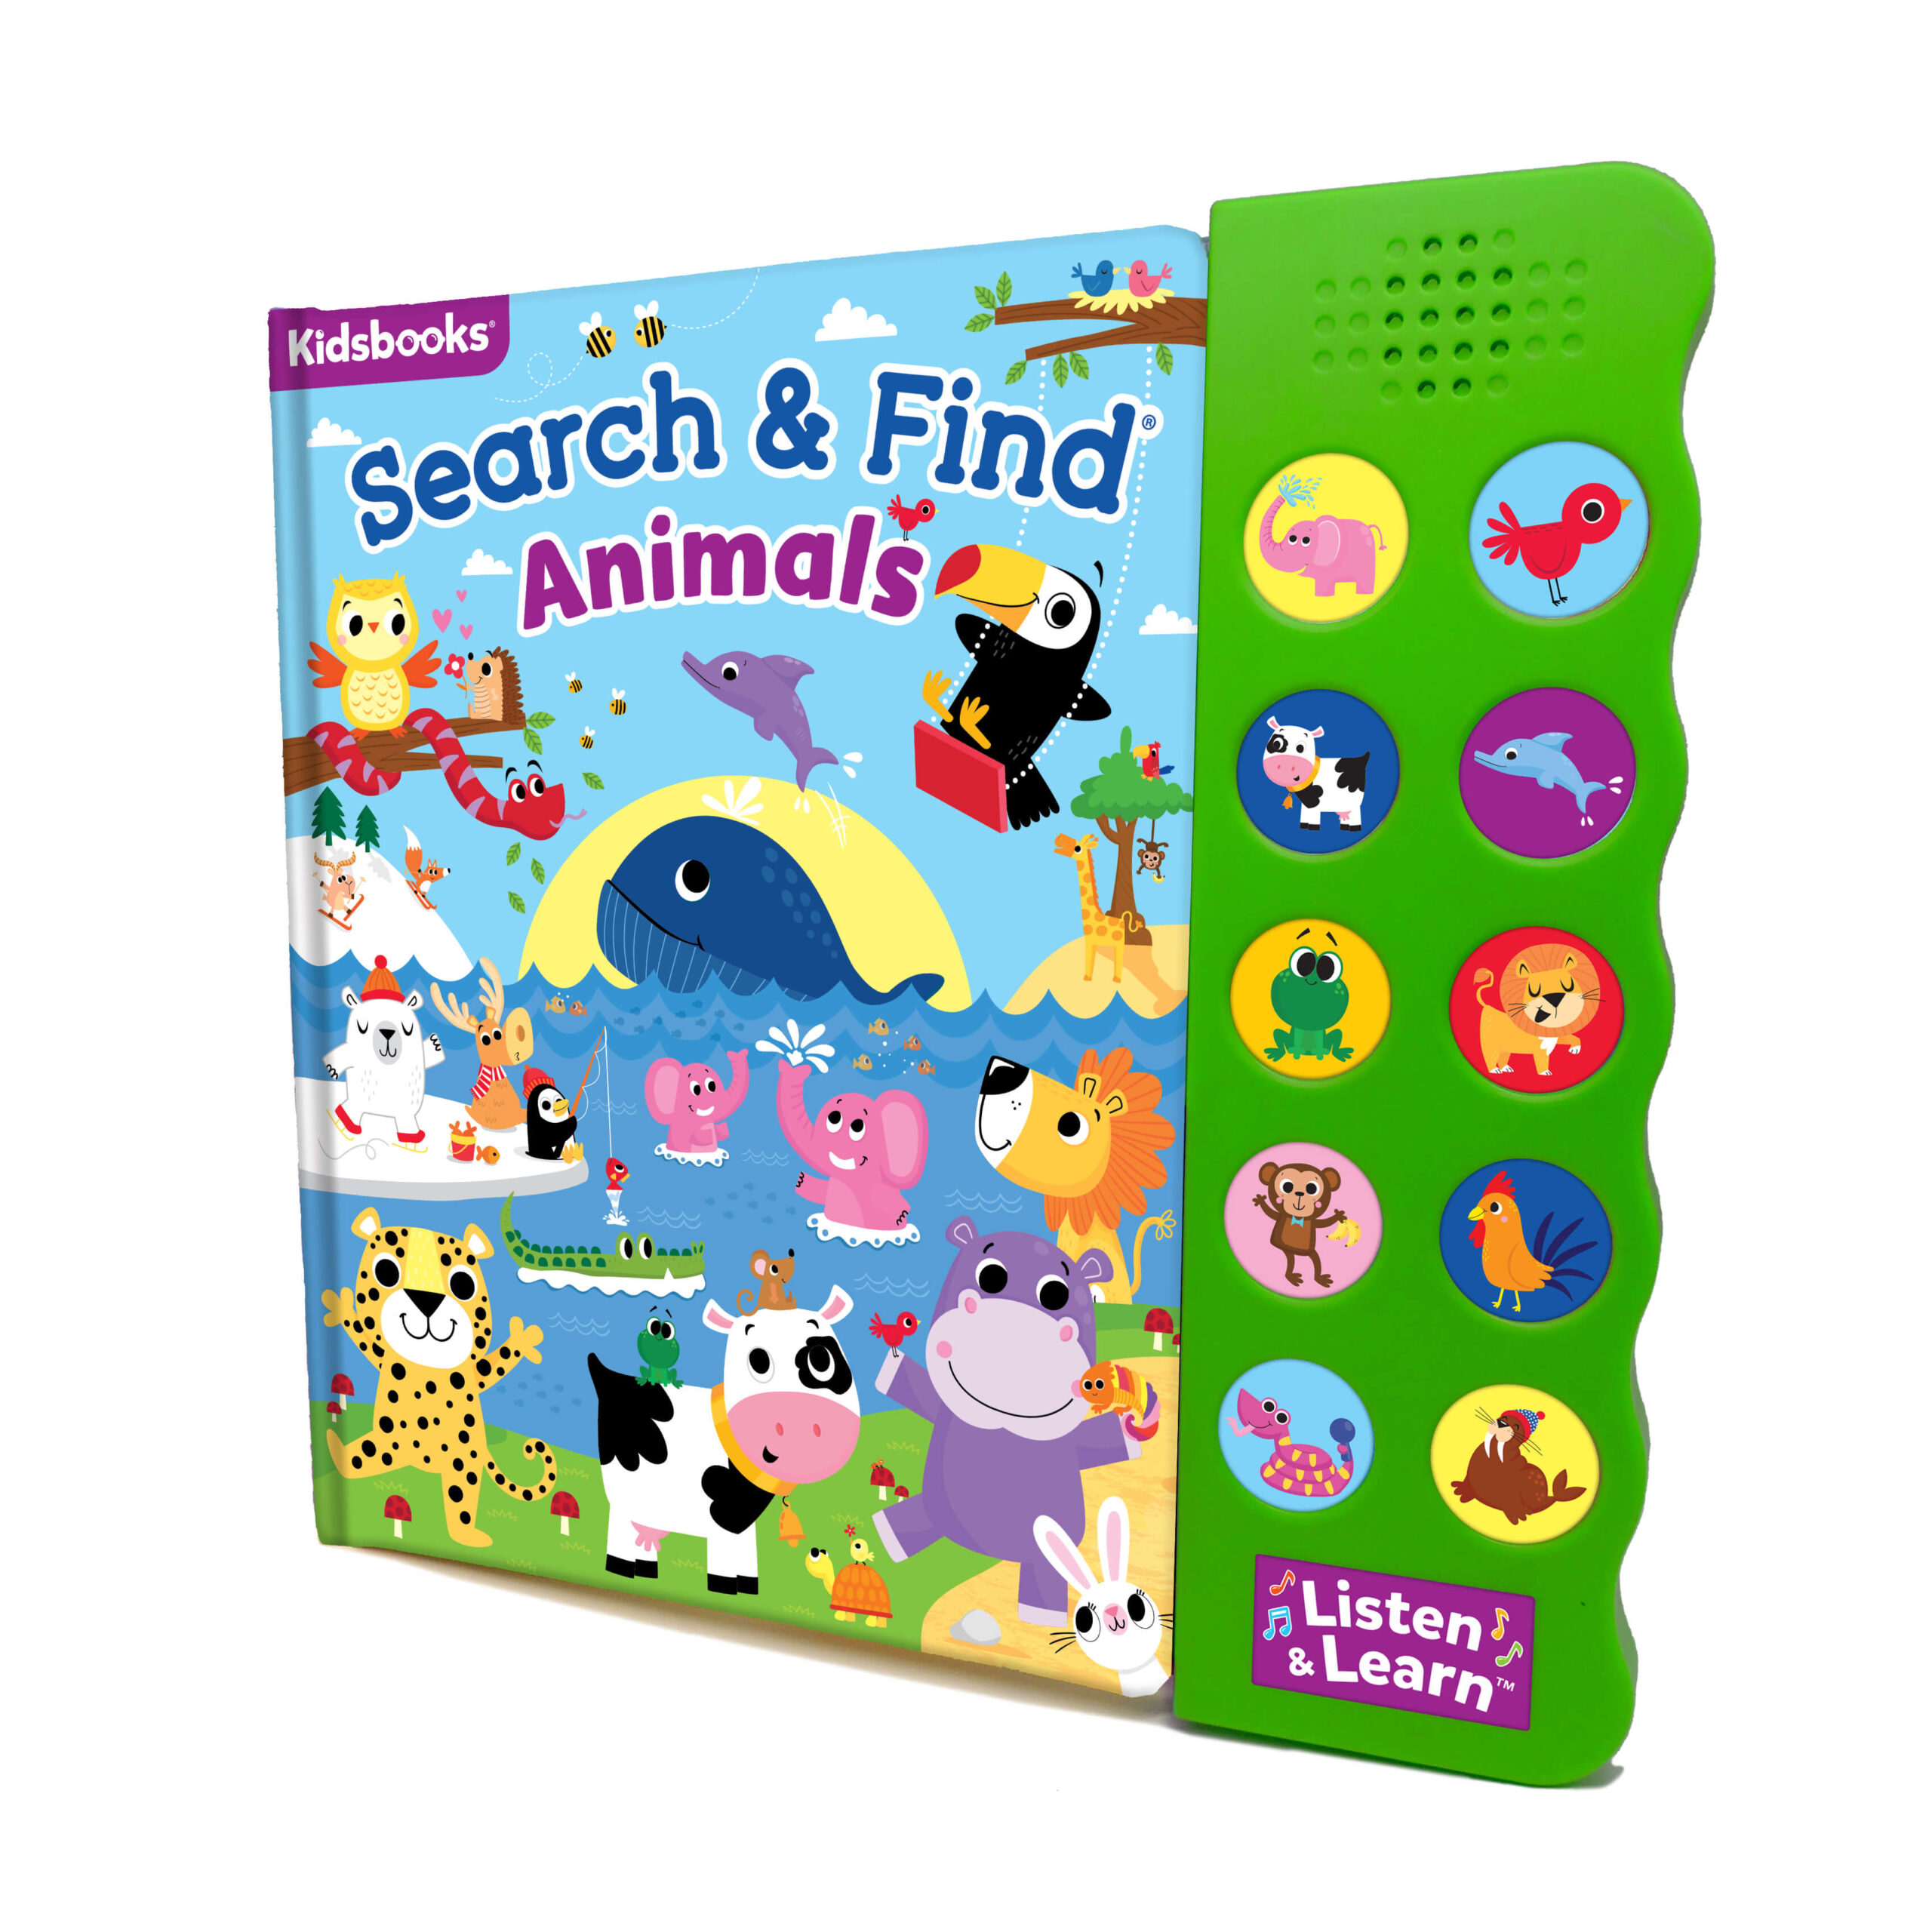 Search & Find: Animals